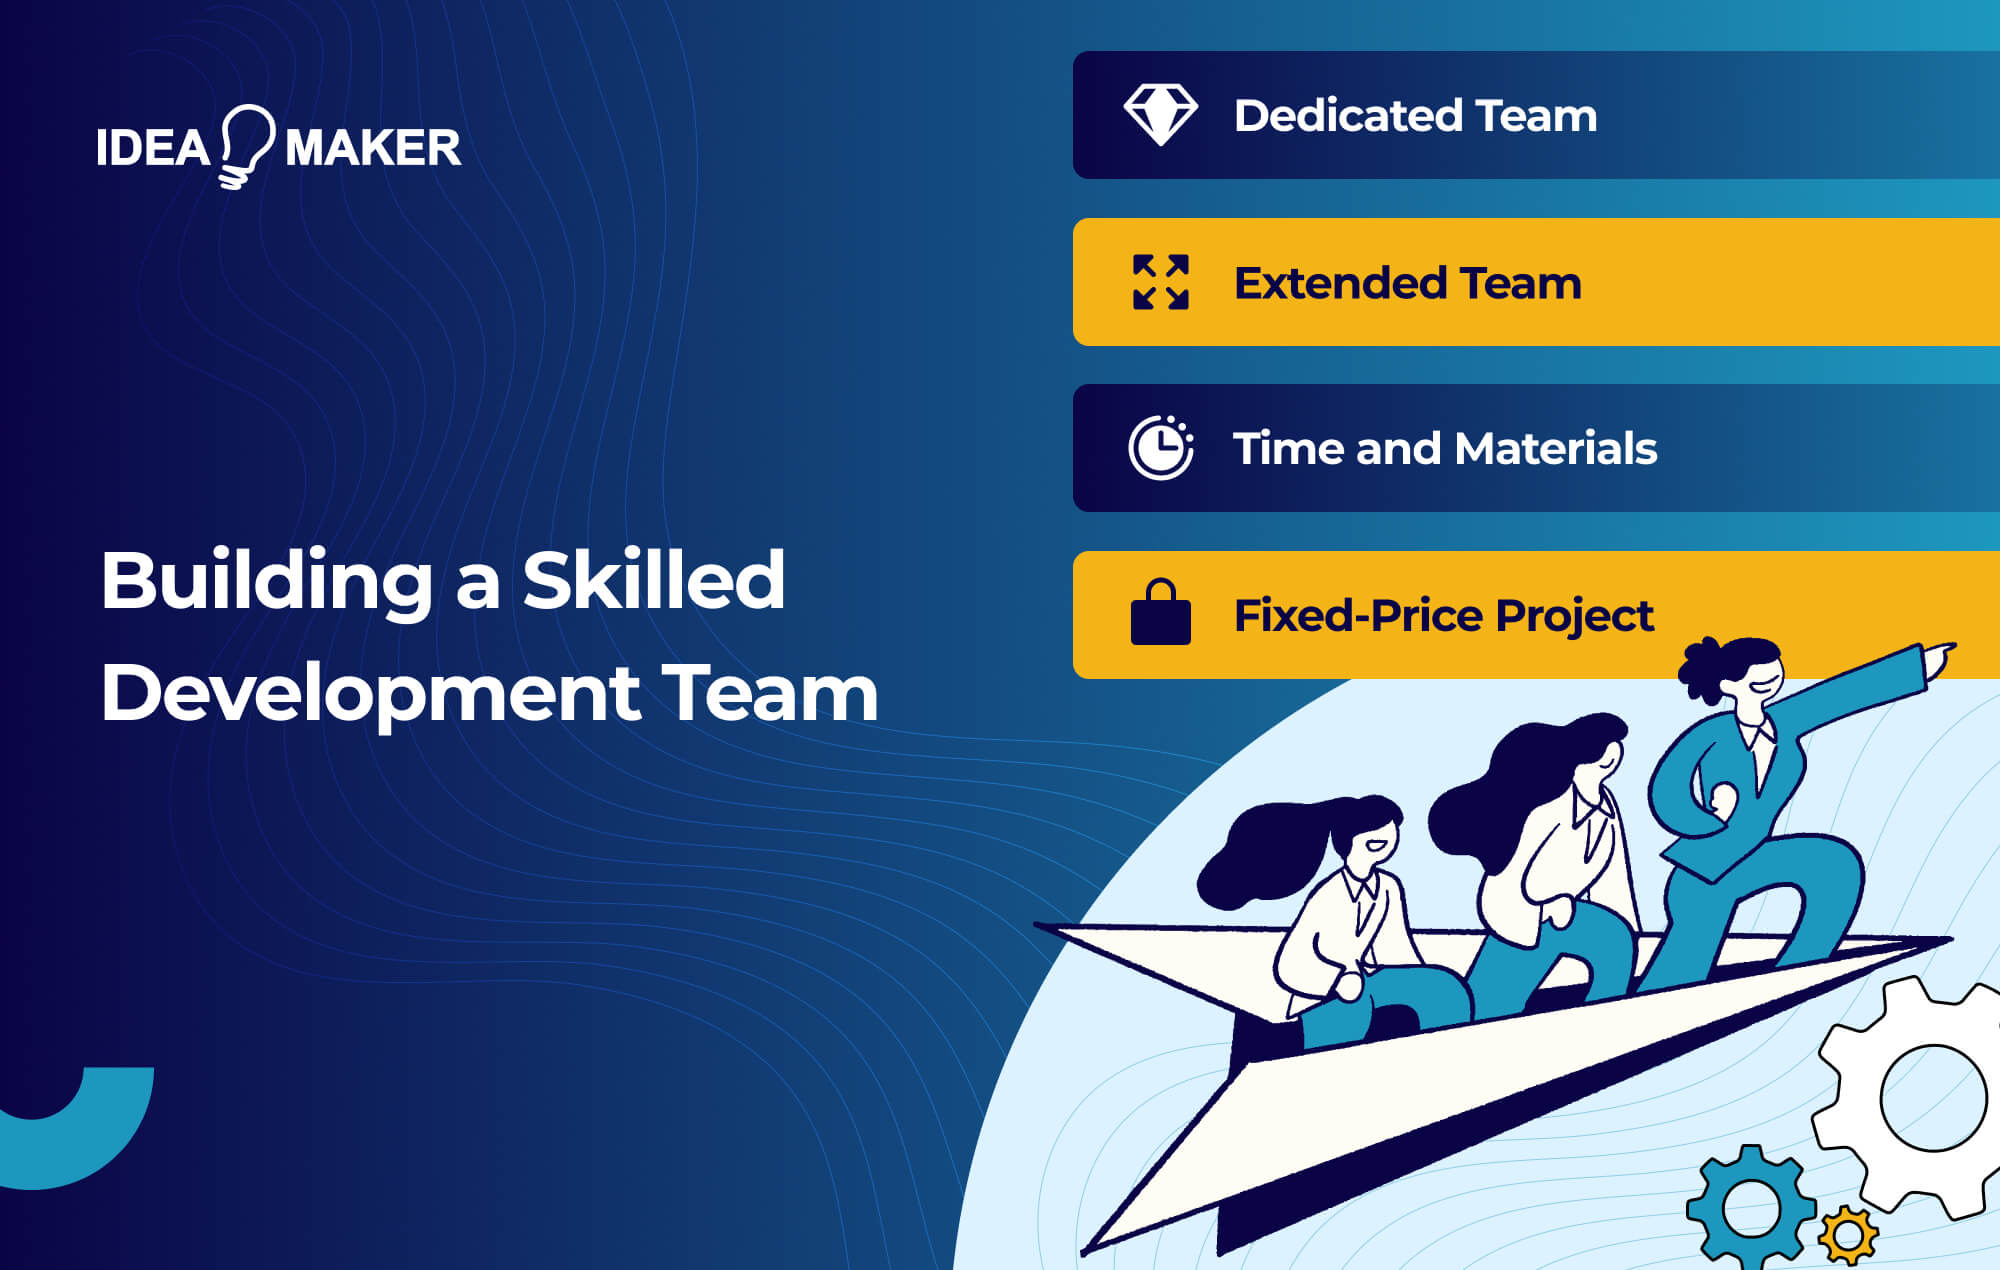 Ideamaker - Building a Skilled Development Team